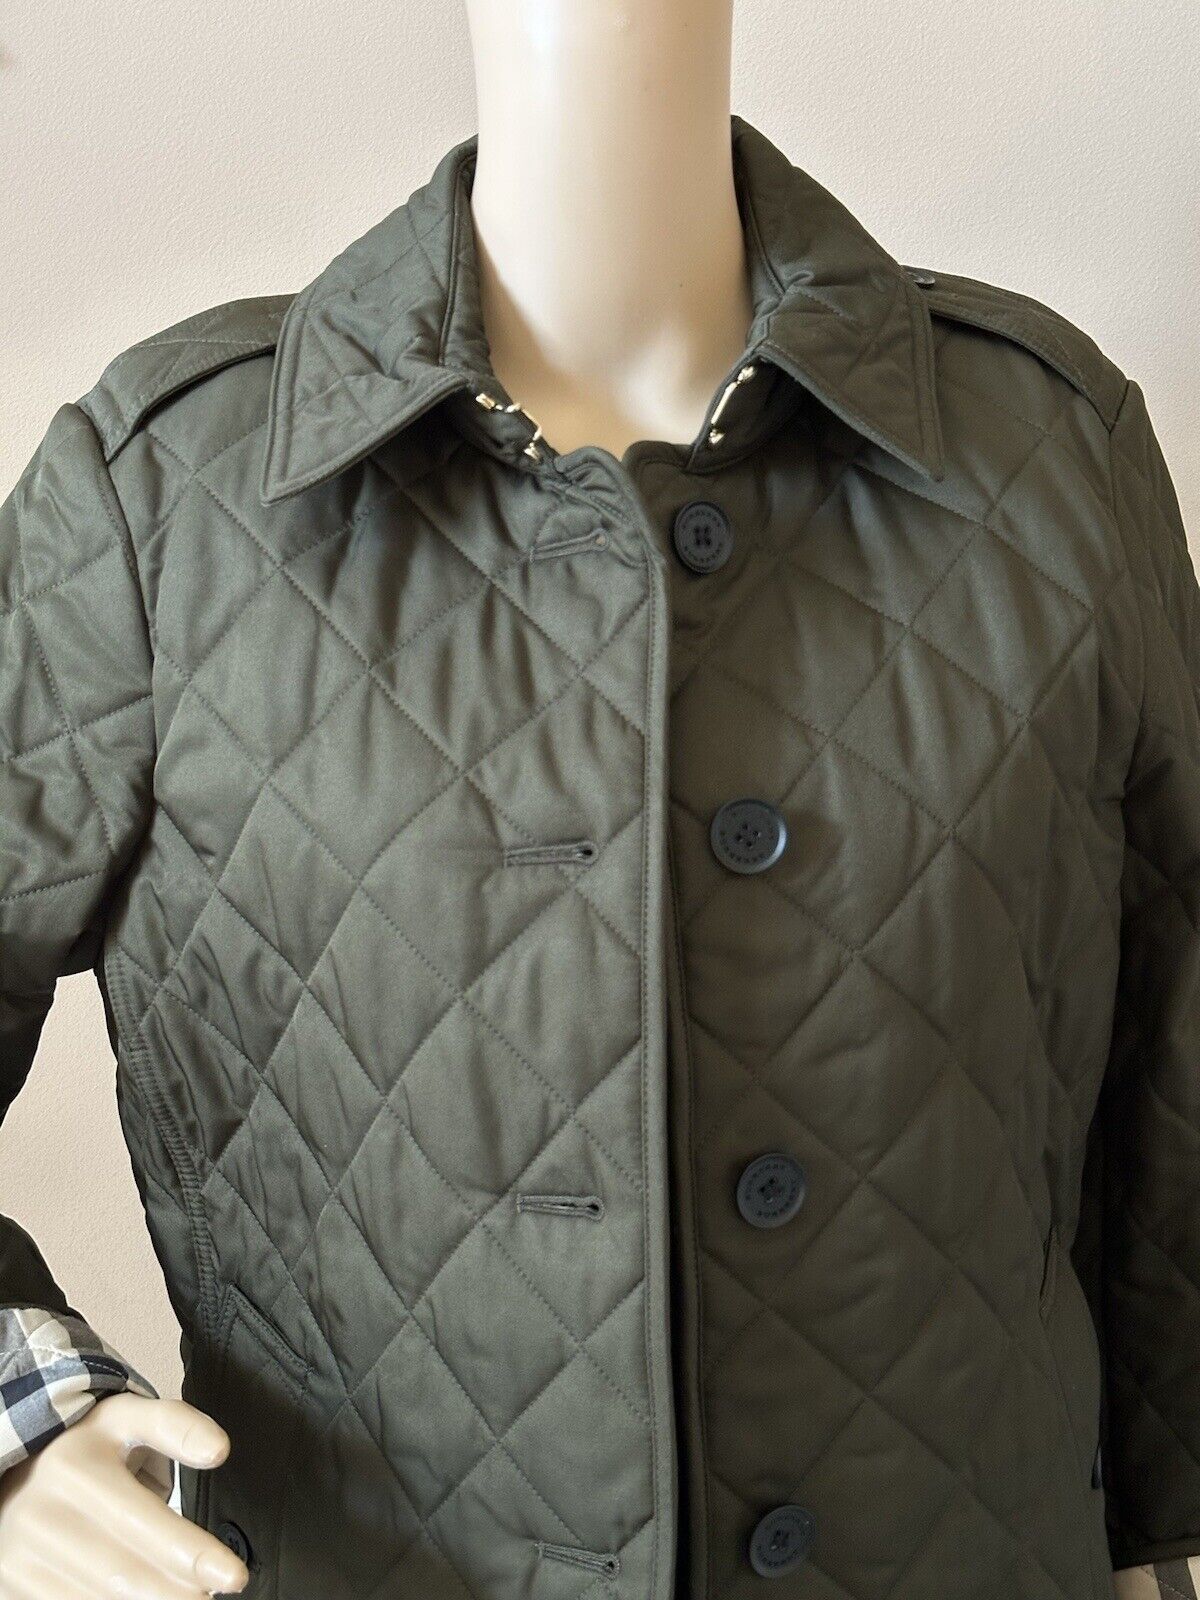 NWT $960 Burberry Women's Quilted Diamond Dark Olive Jacket  Medium 8065873